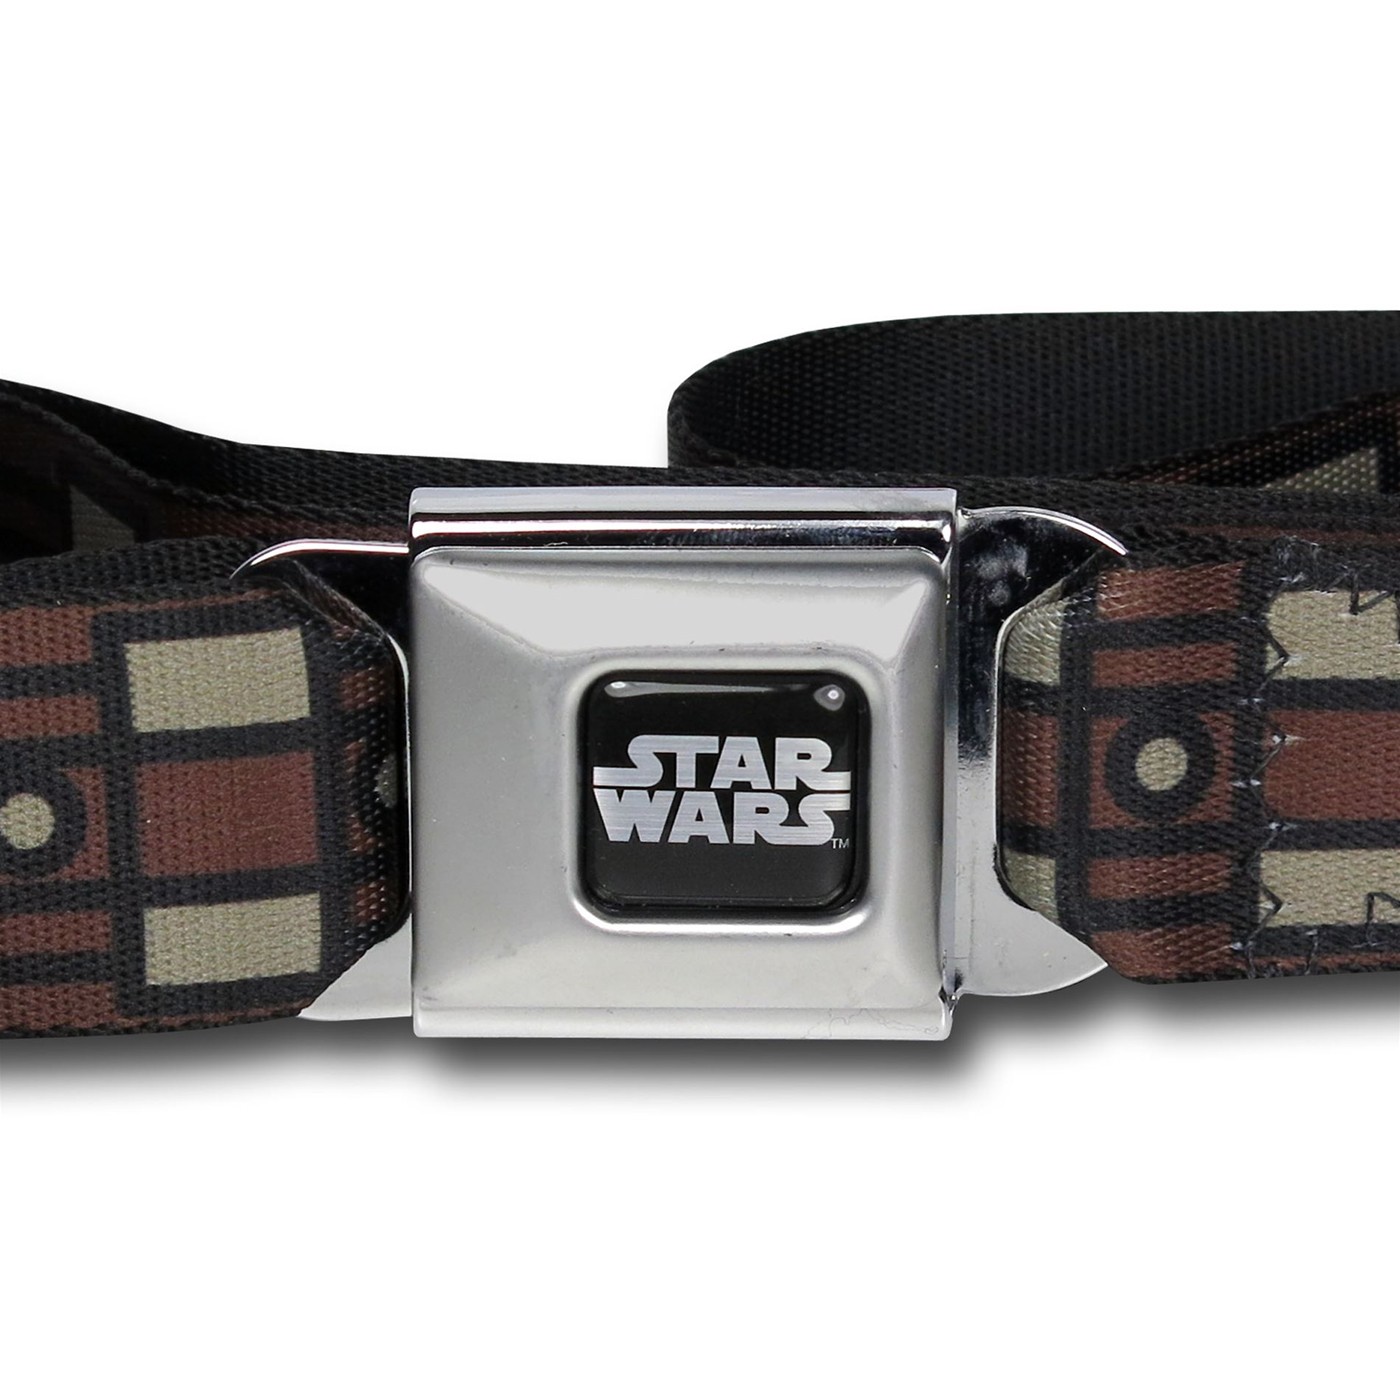 Star Wars Chewbacca Bandolier Seatbelt Belt